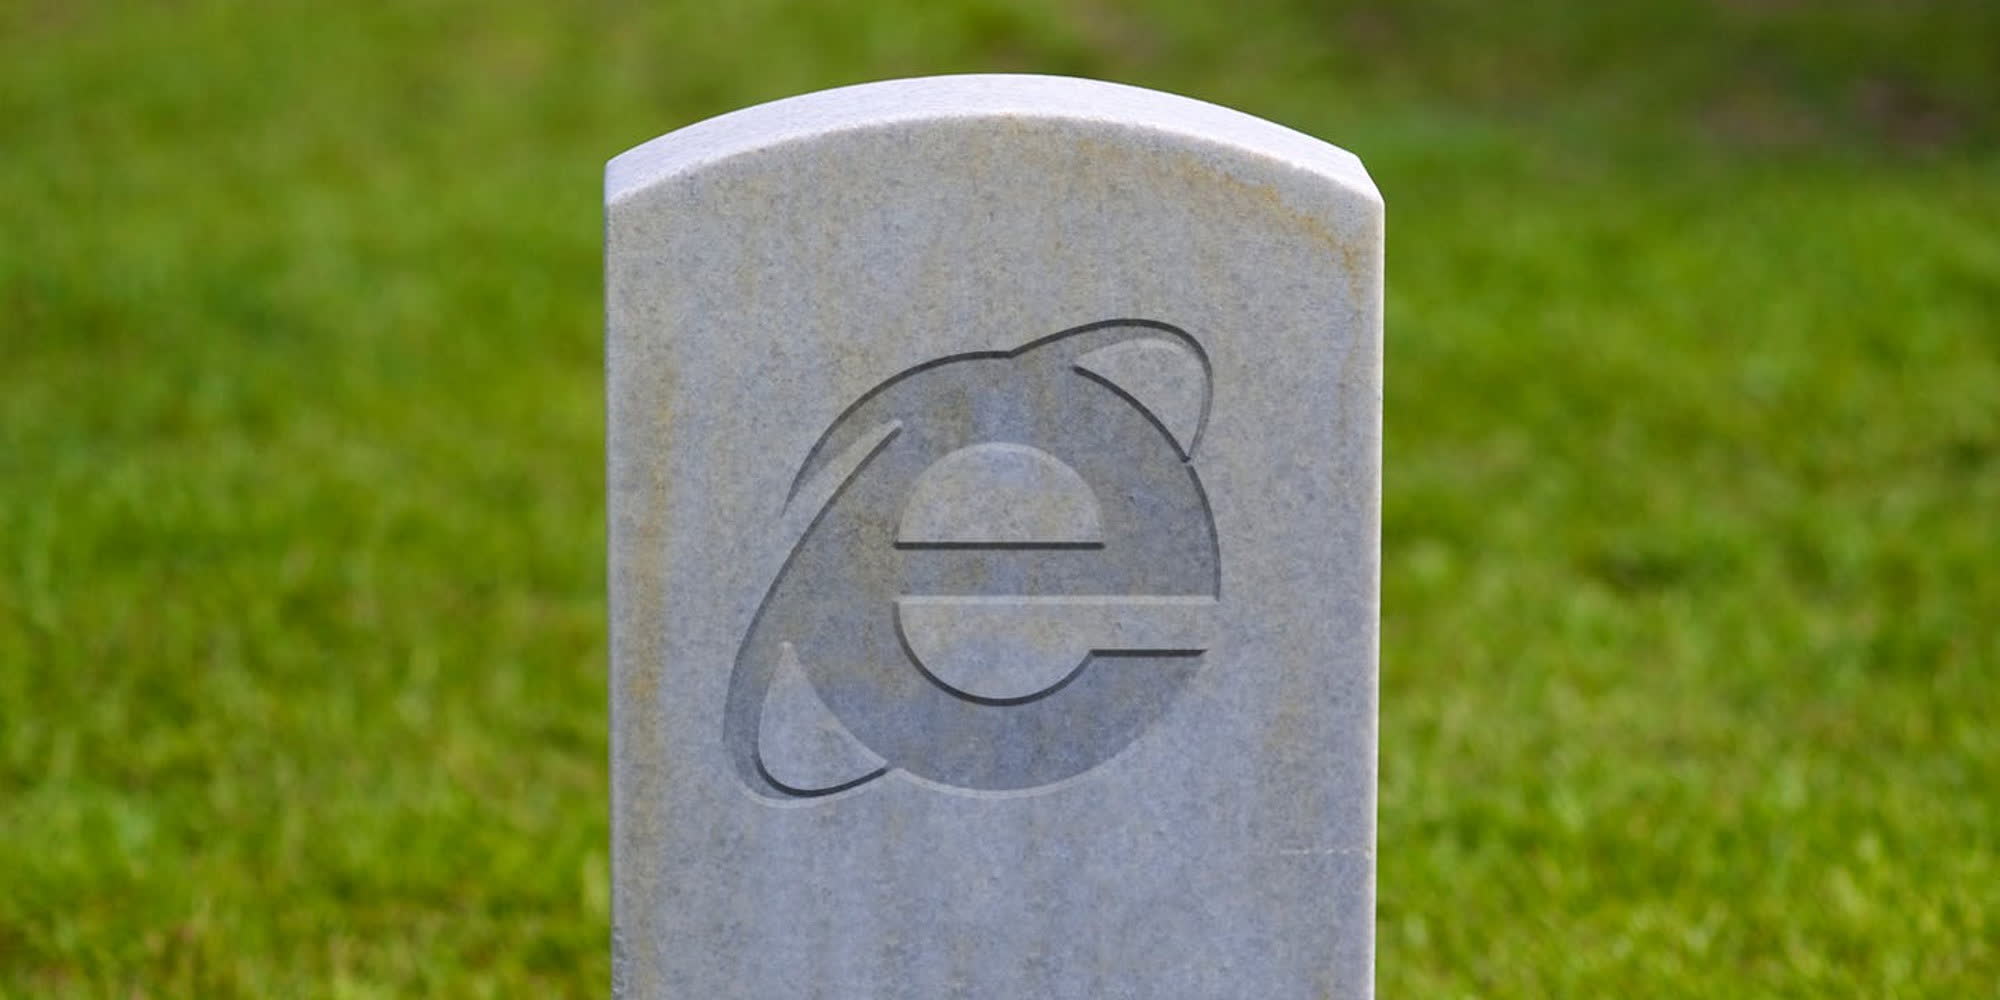 Microsoft will let Internet Explorer's empty husk live on in Windows